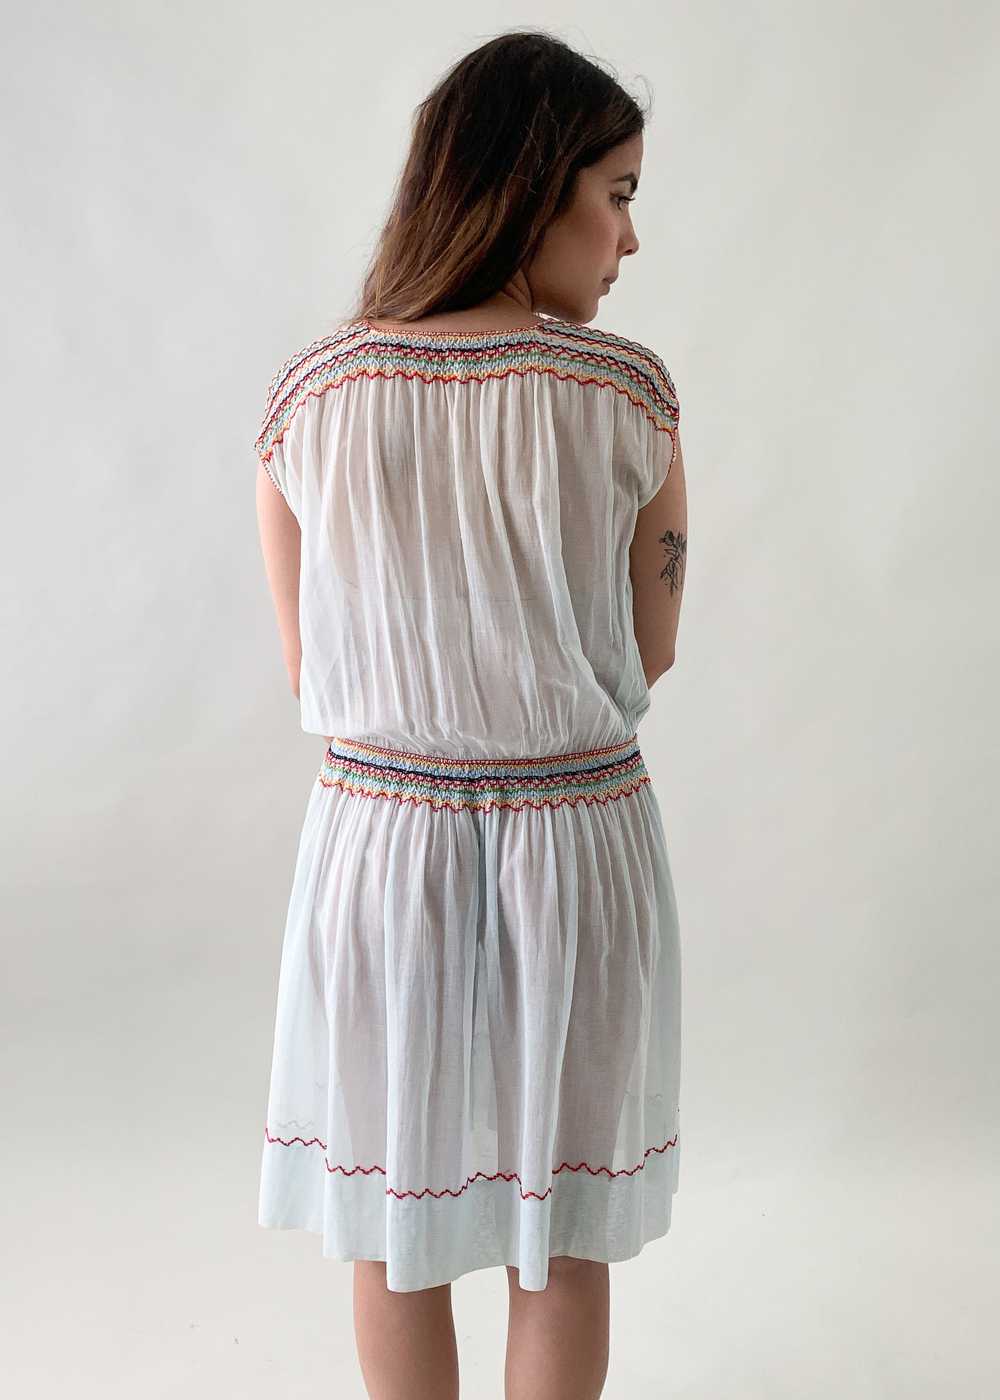 Vintage 1920s Embroidered Cotton Dress - image 3